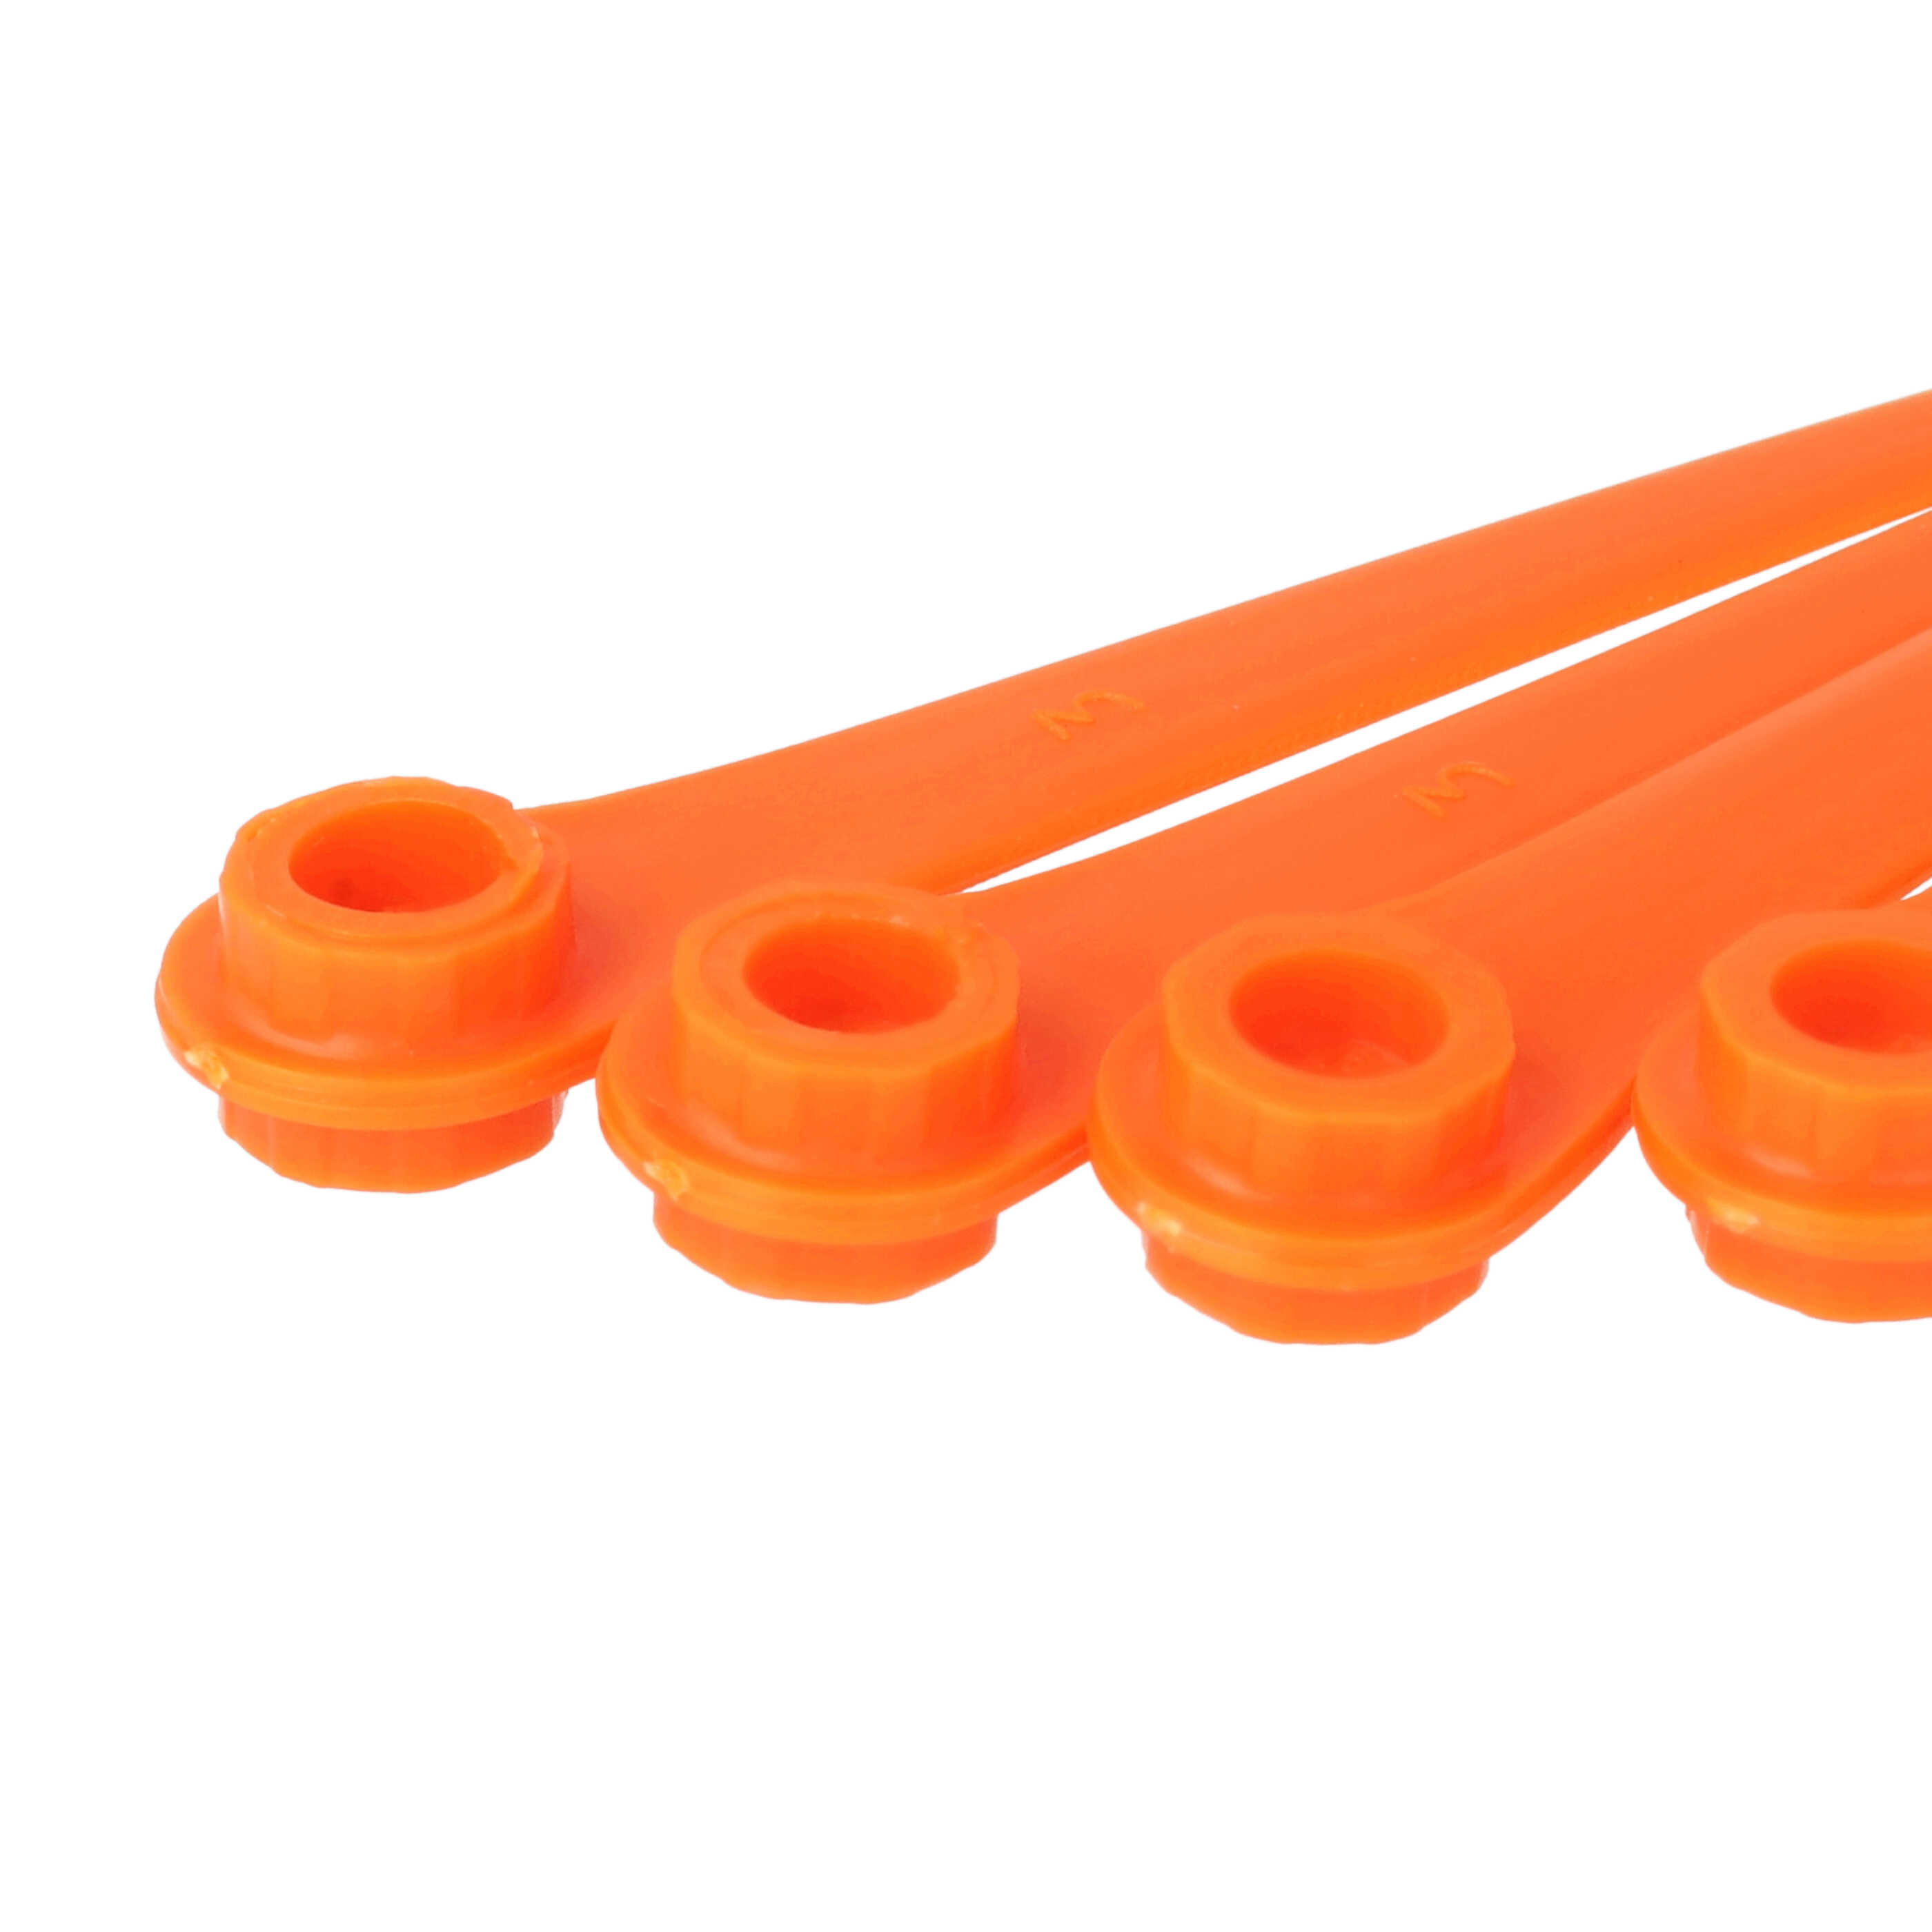 50x Lama sostituisce Gardena RotorCut 5368-20 per tagliaerba - arancione, plastica